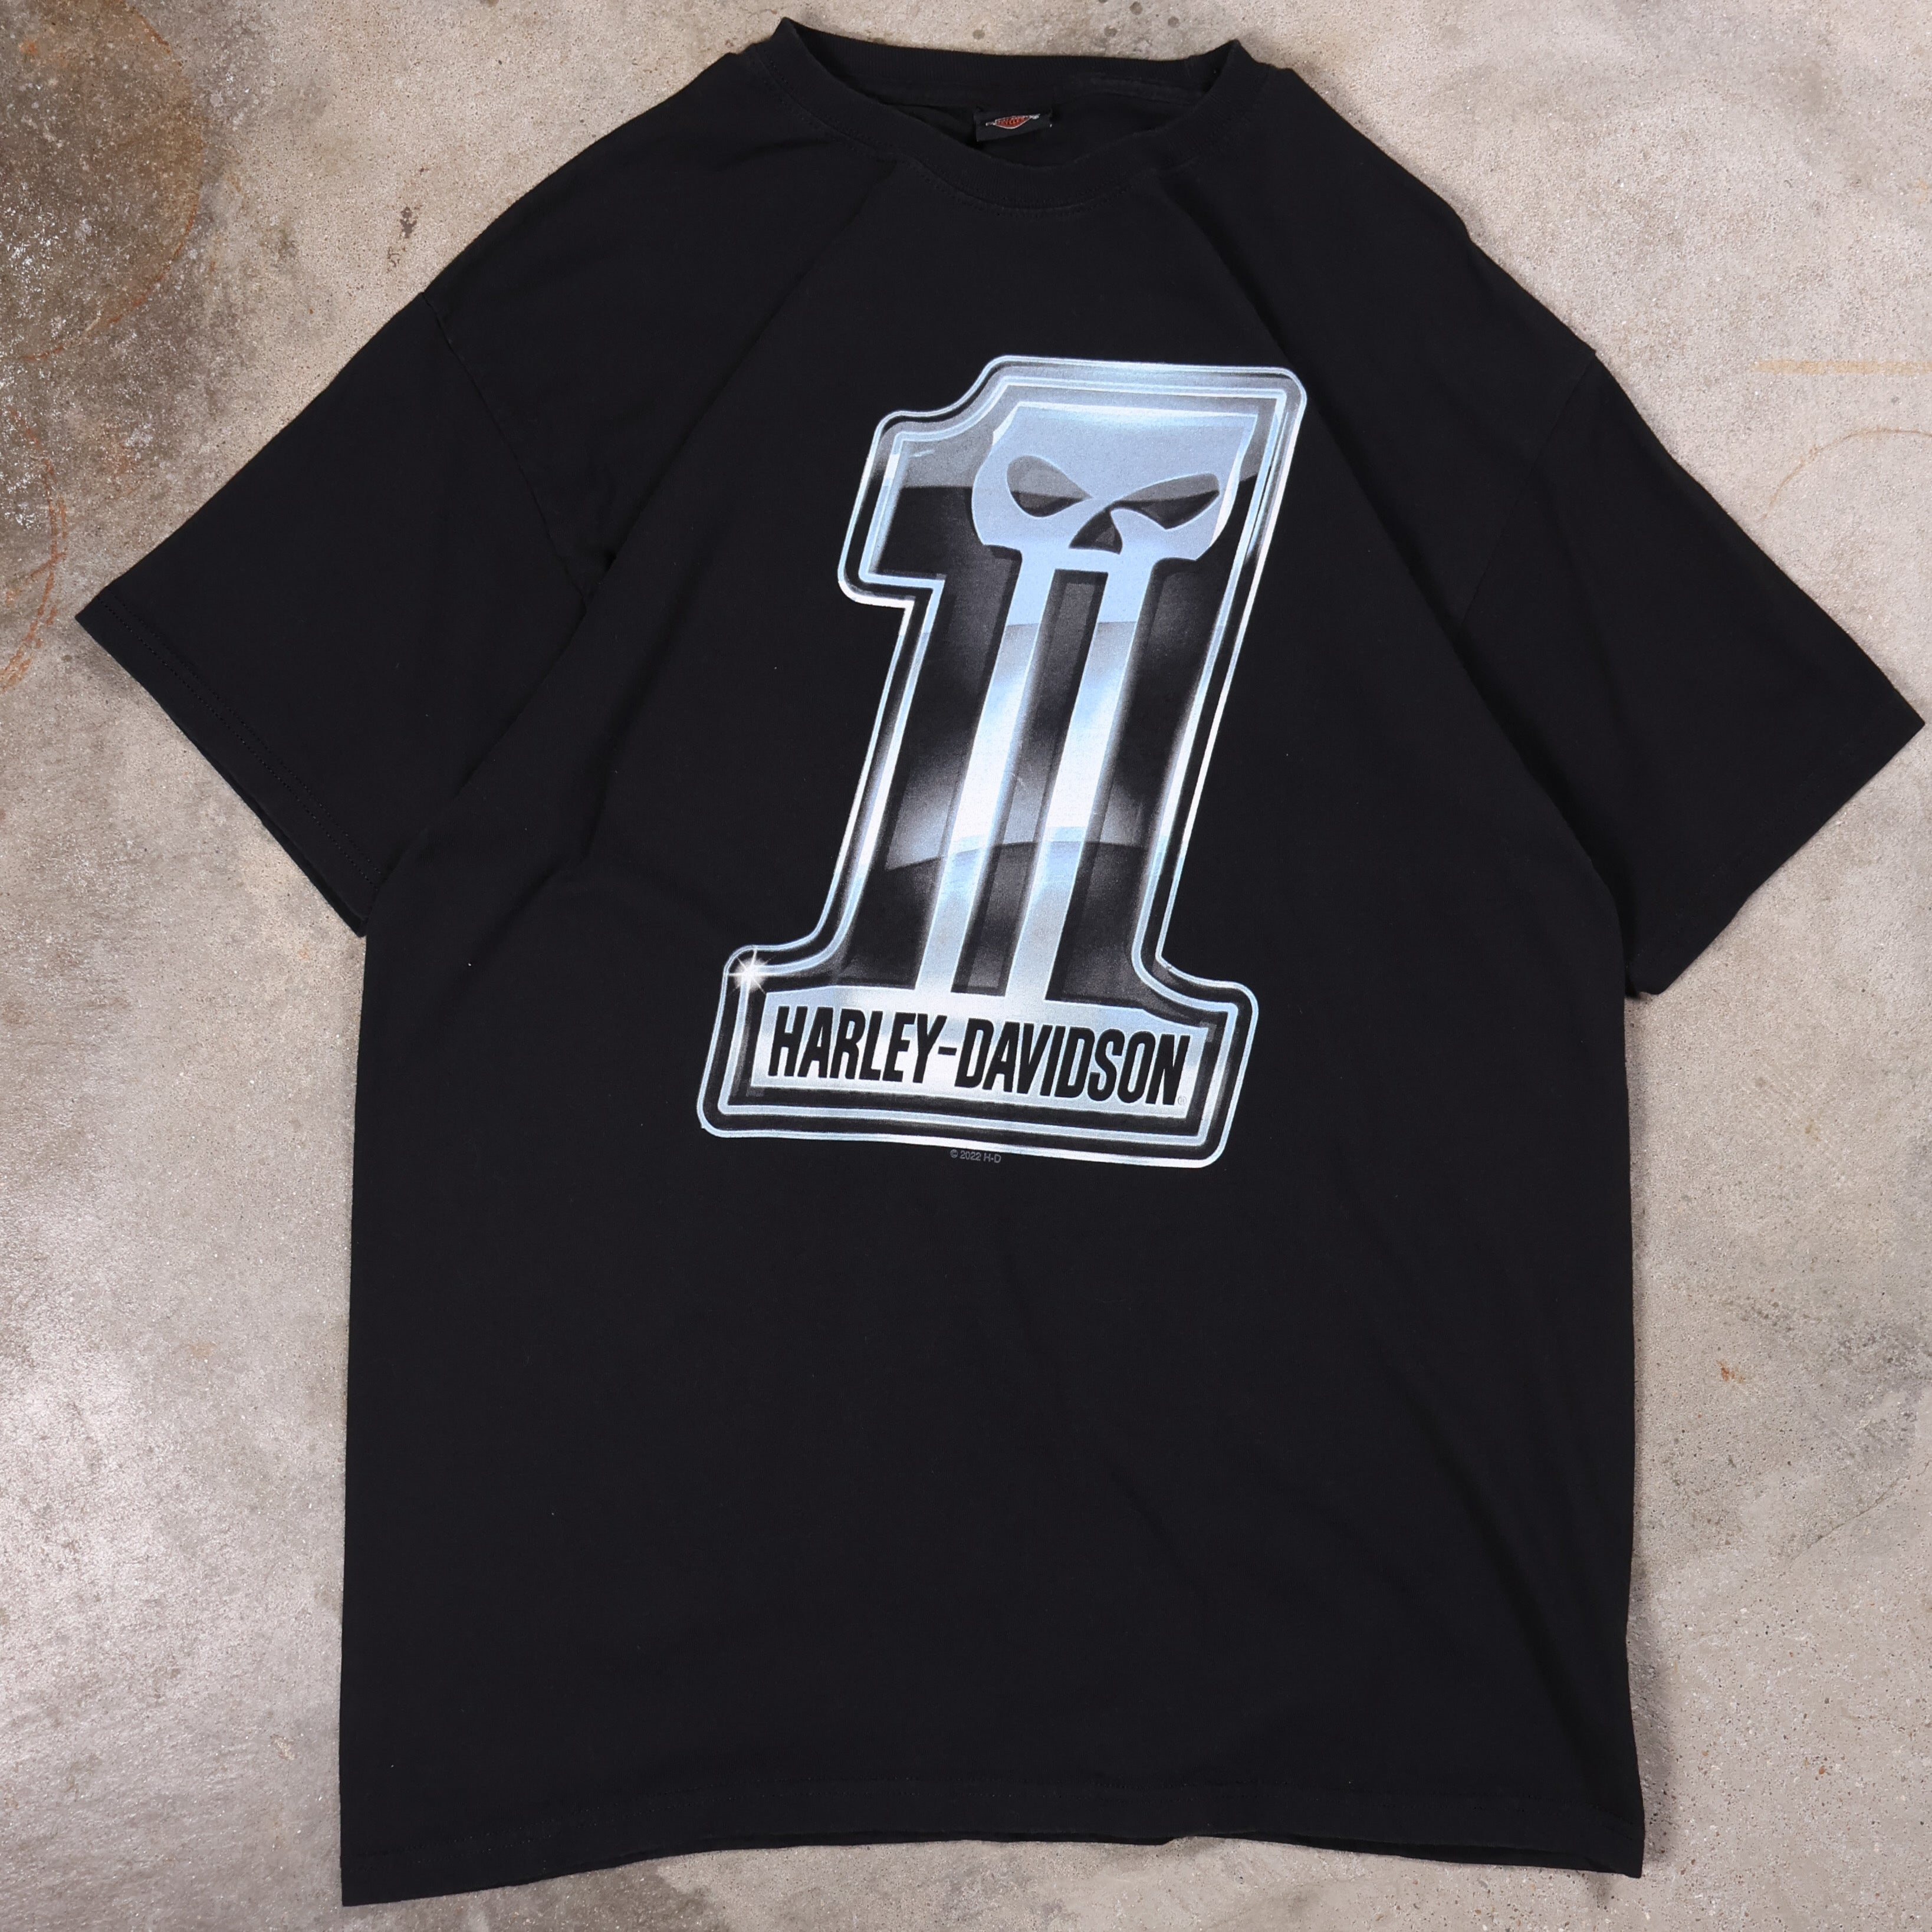 Harley Davidson Racing T-Shirt (Large)